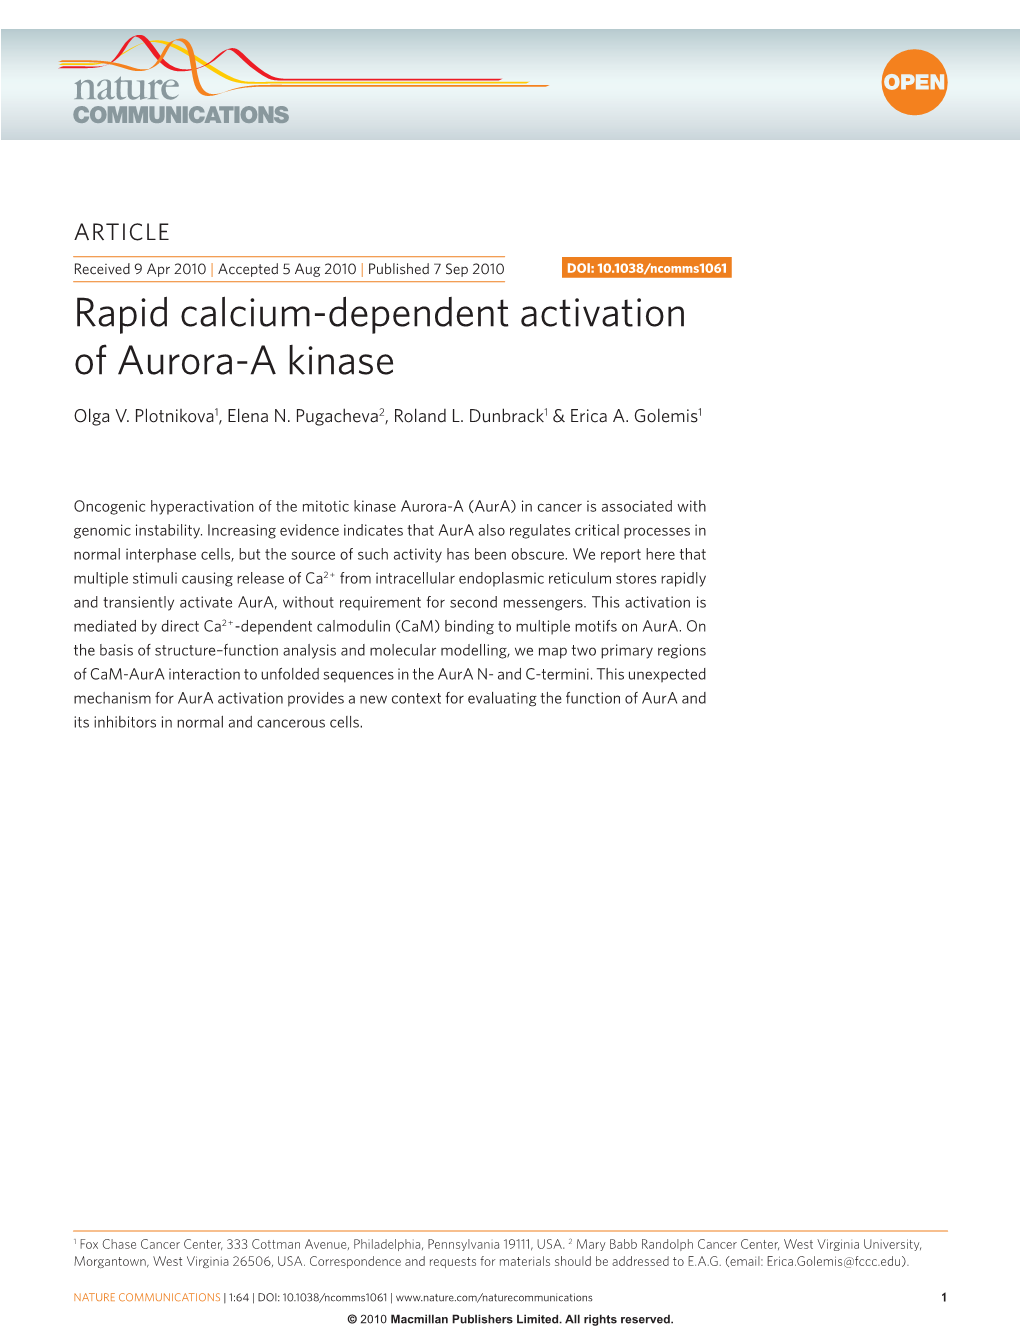 Rapid Calcium-Dependent Activation of Aurora-A Kinase